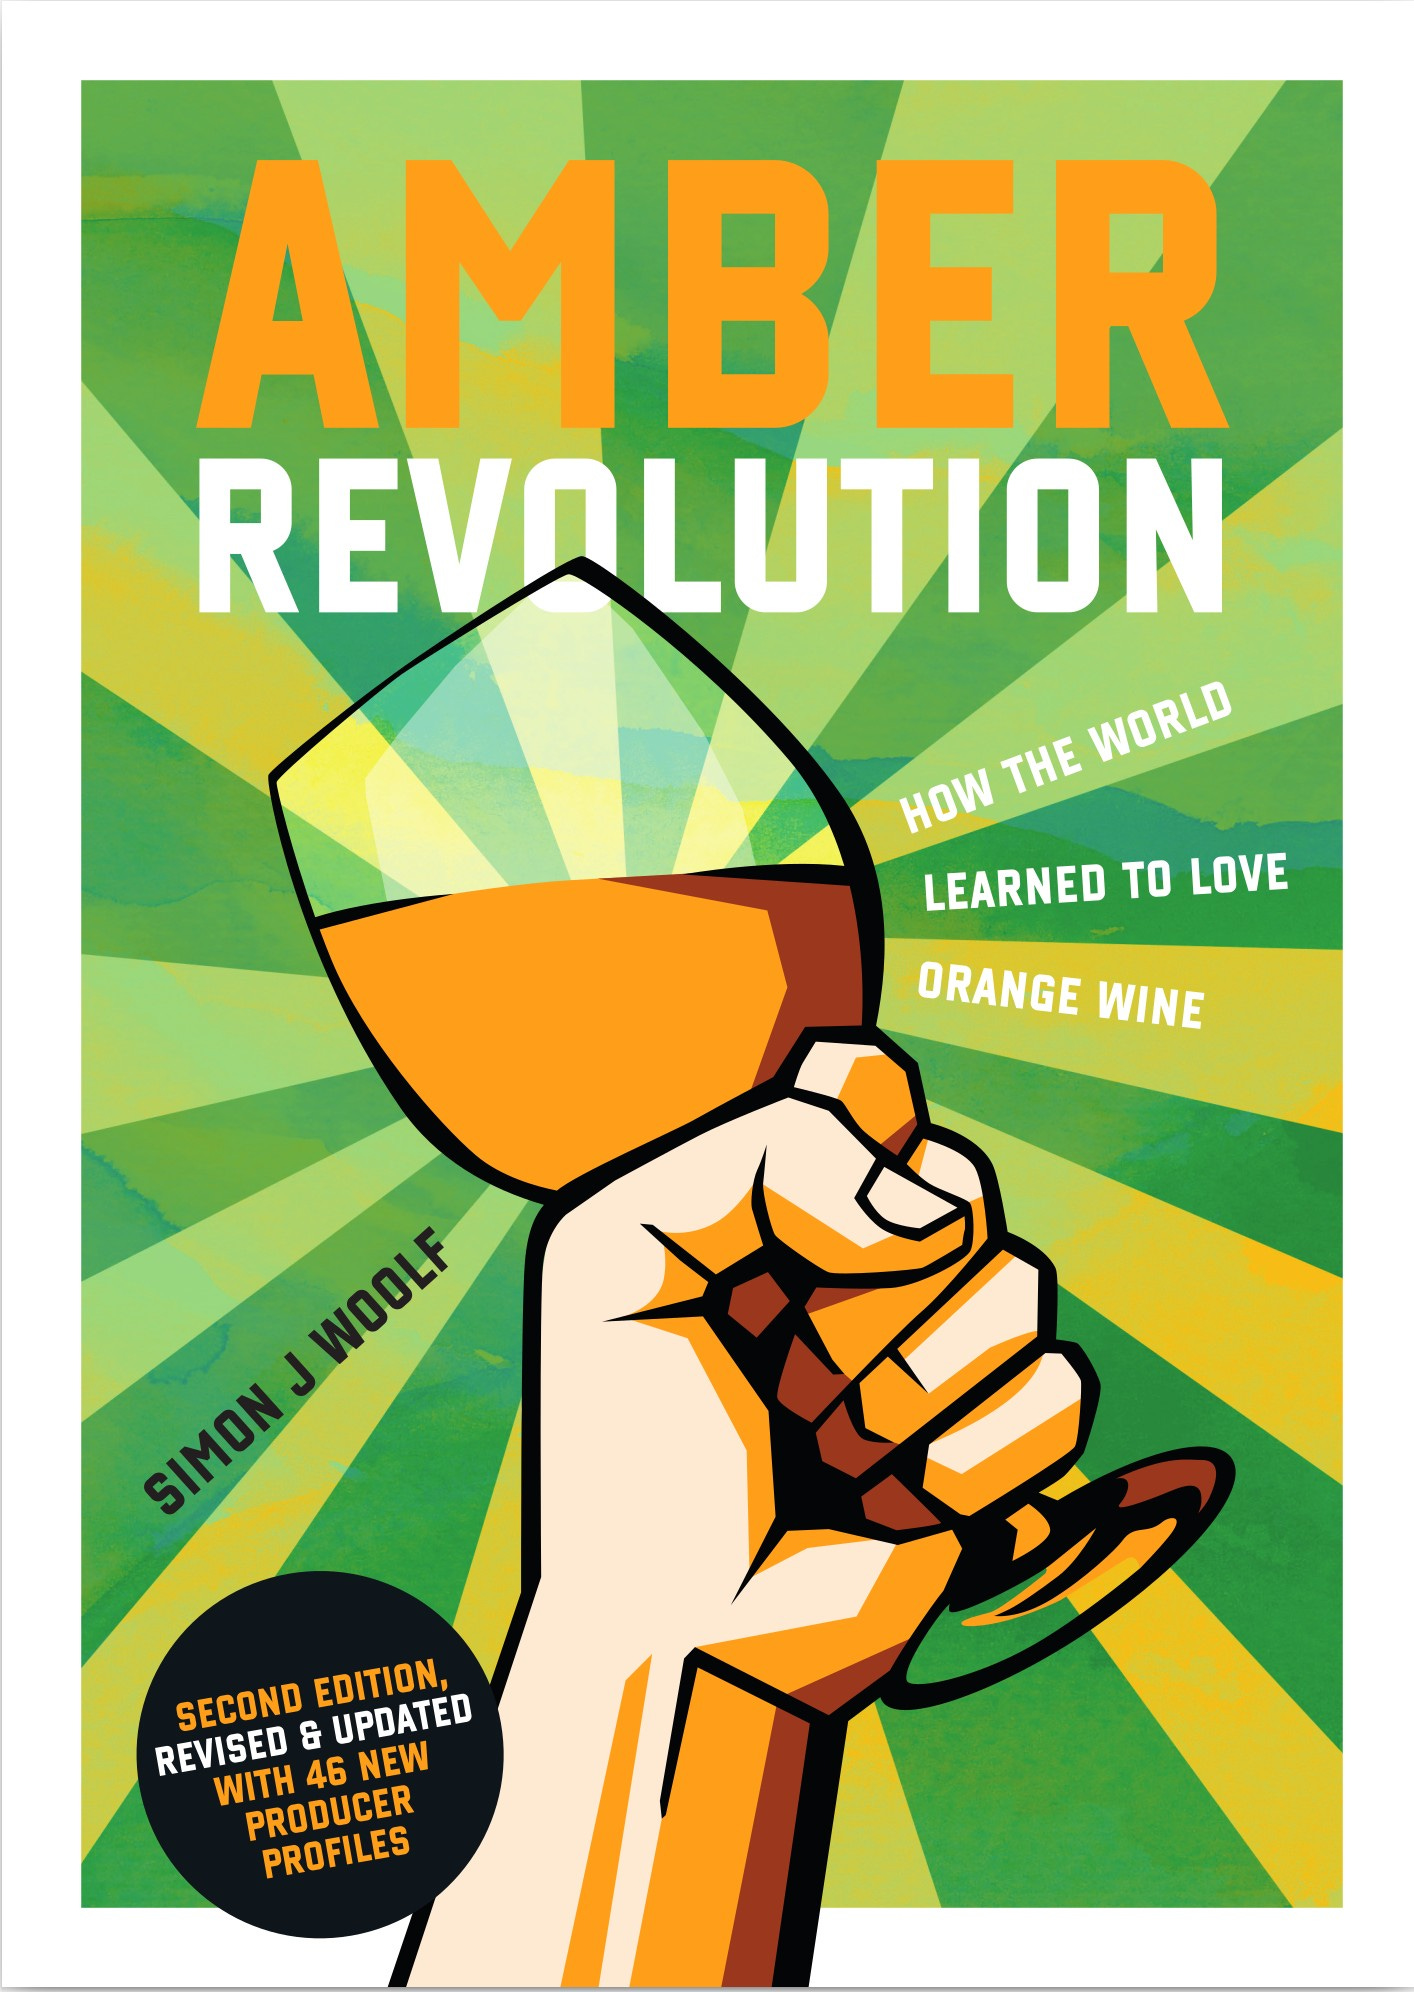 Buy Amber Revolution for the lowdown on orange wines.